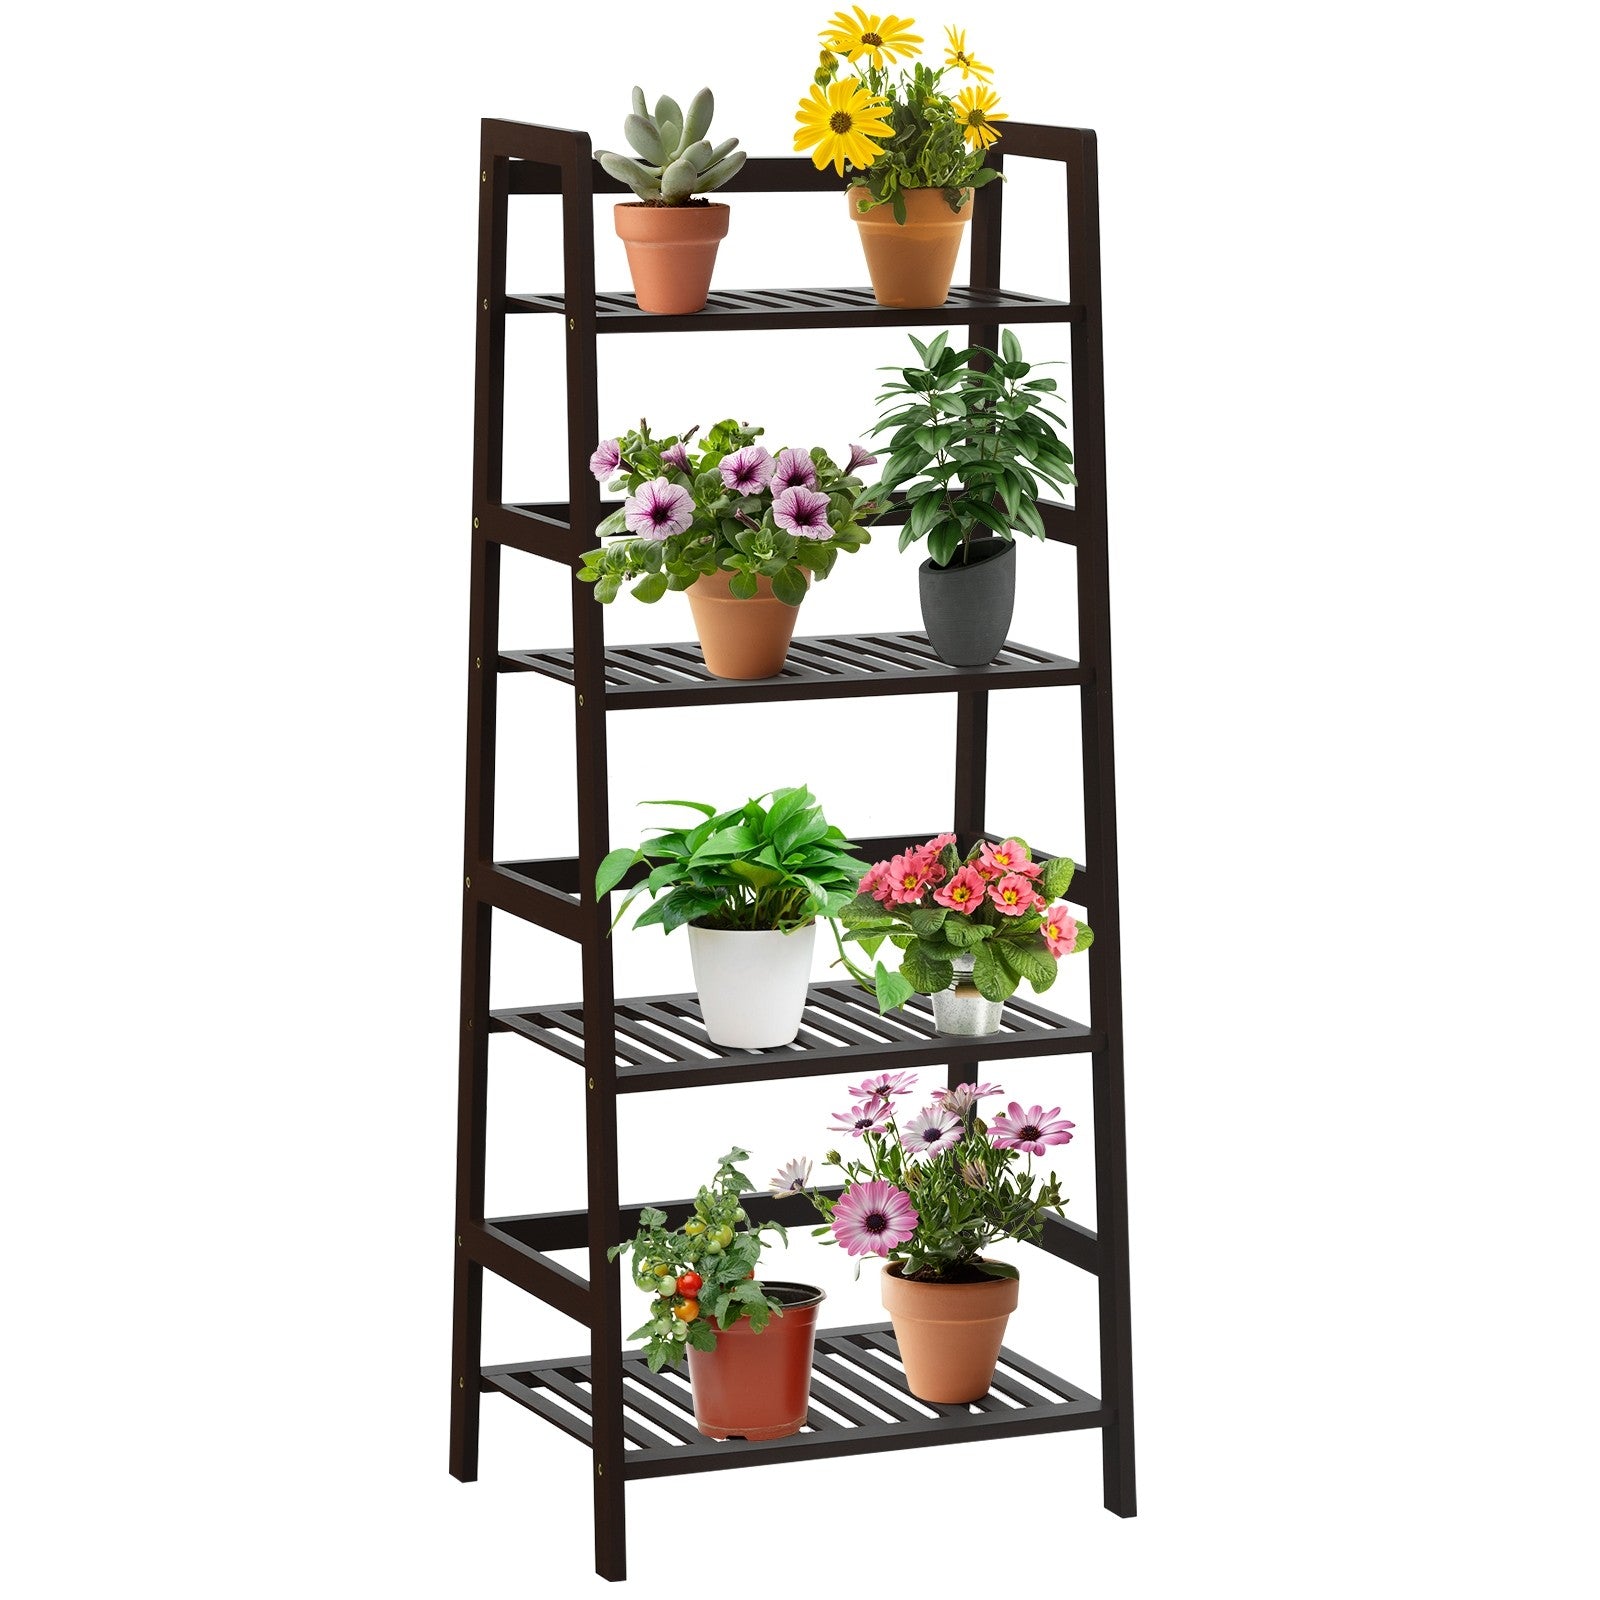 4-Tier Ladder Shelf Plant Stand | Bamboo Flower Pots Holder